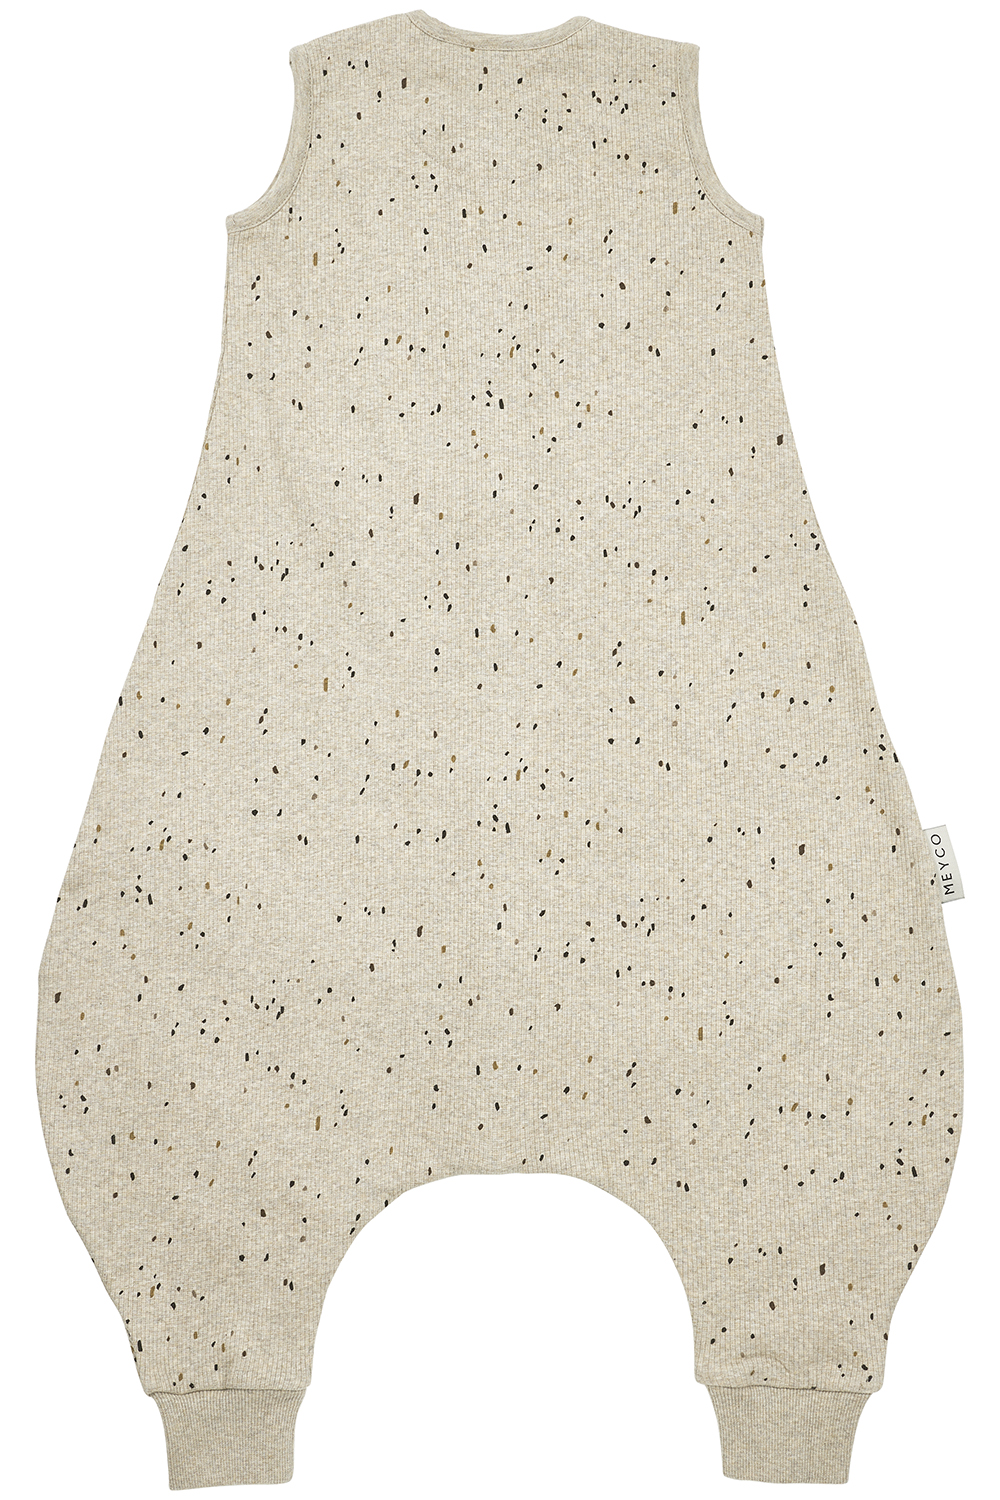 Baby zomer slaapoverall jumper Rib Mini Spot - sand melange - 104cm